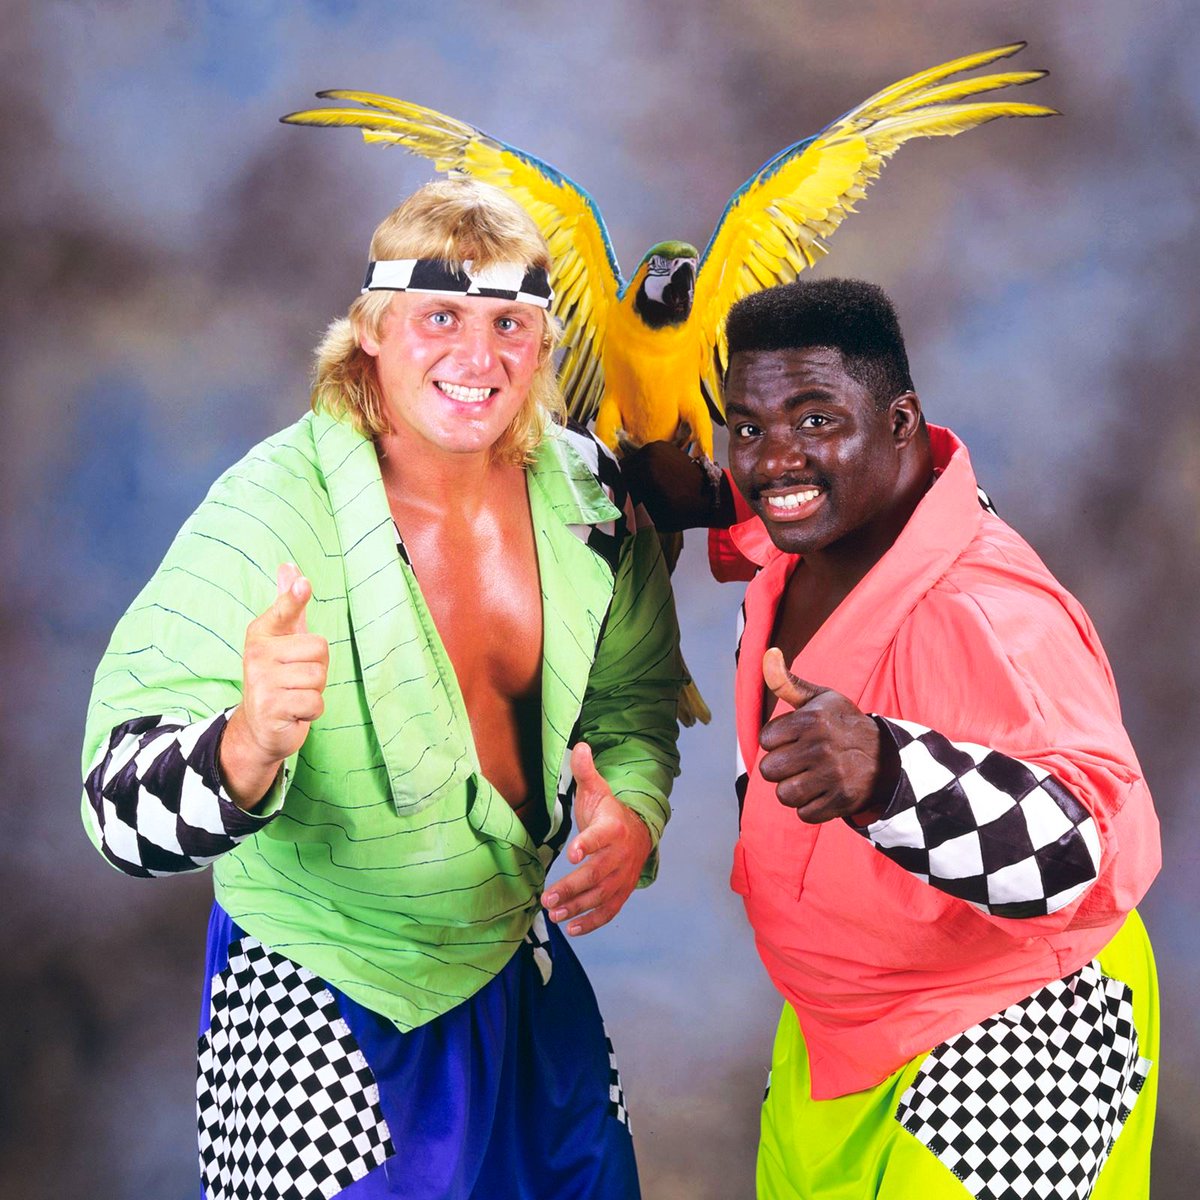 Tag Team Tuesday! Owen Hart & Koko B. Ware - High Energy! 🦜 @wwekokobware #WWF #WWE #Wrestling #OwenHart #KokoBWare